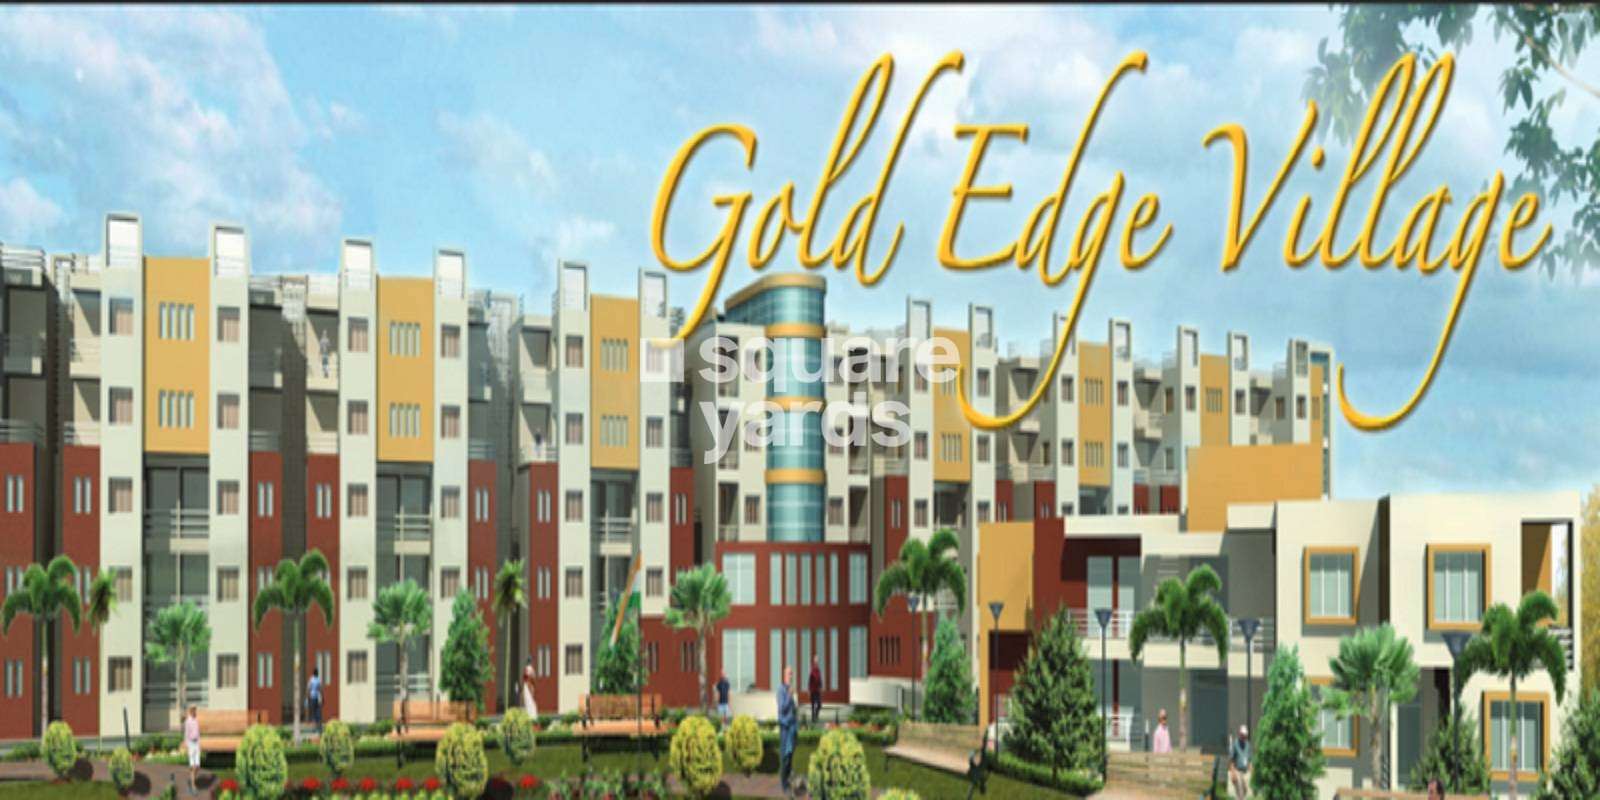 Enrico Gold Edge Village Cover Image